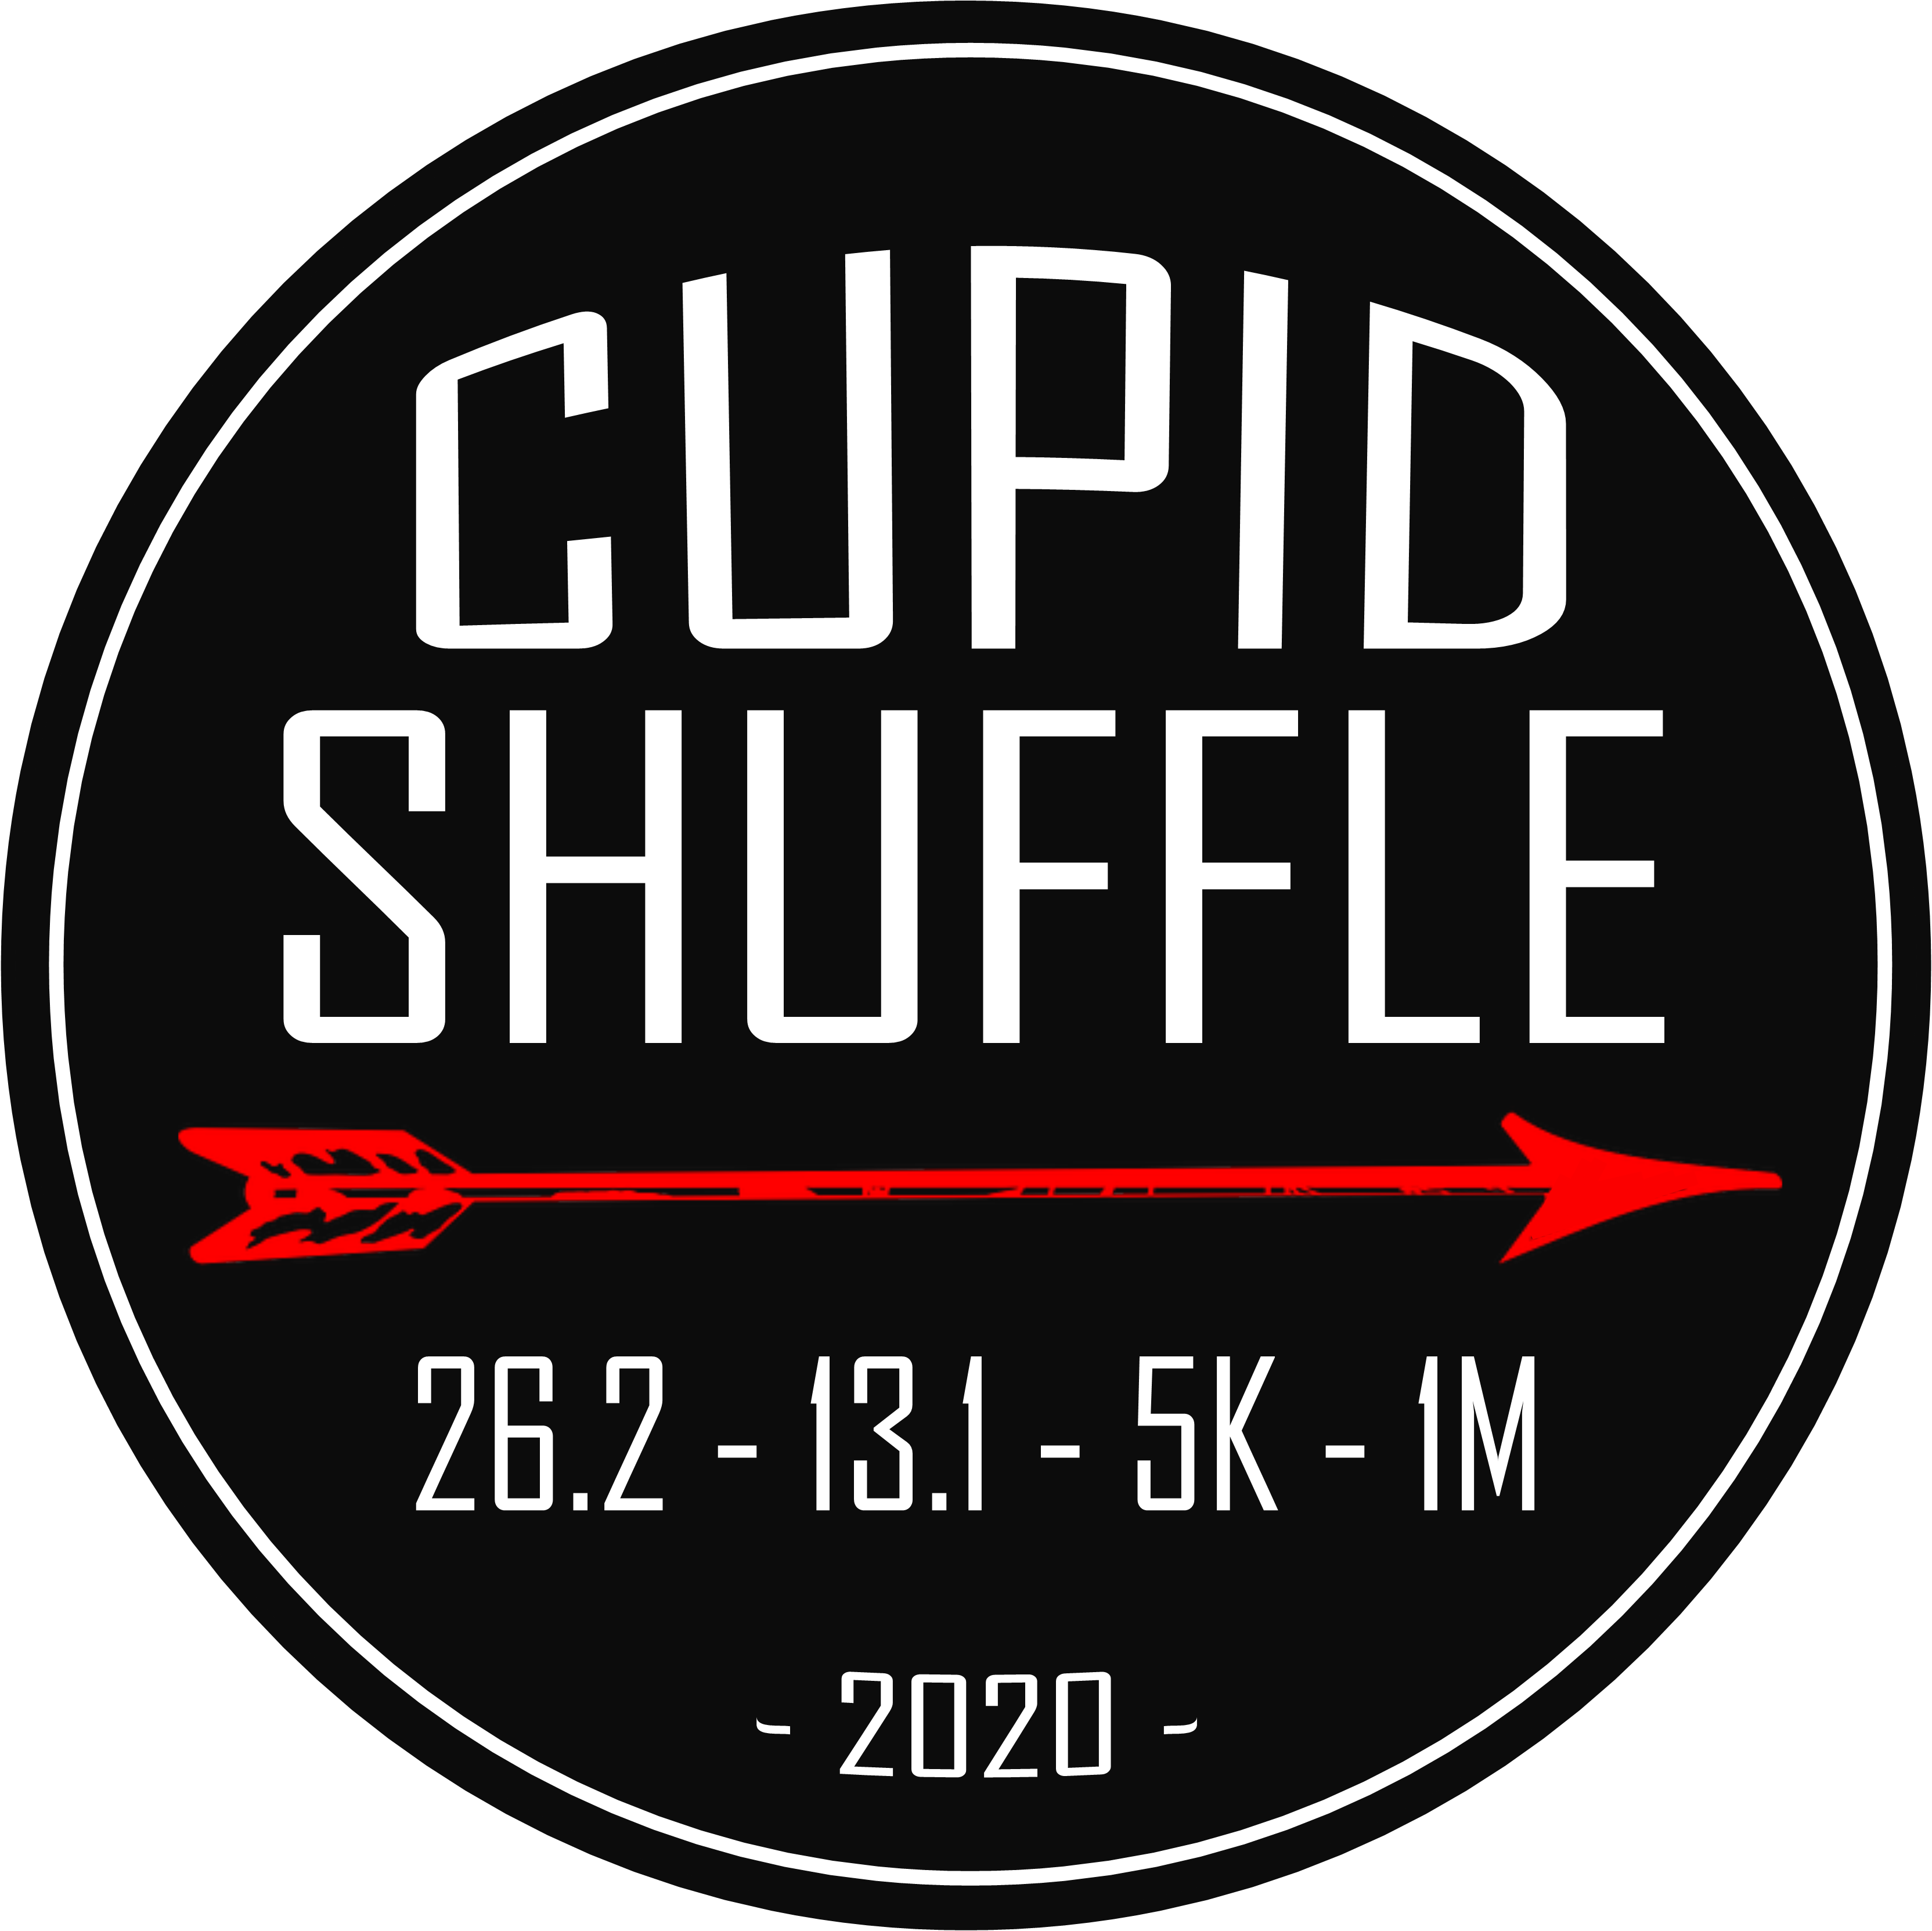 The 2nd Annual Cupid Shuffle Marathon, Half Marathon, 5K, and 1 Mile Fun Run